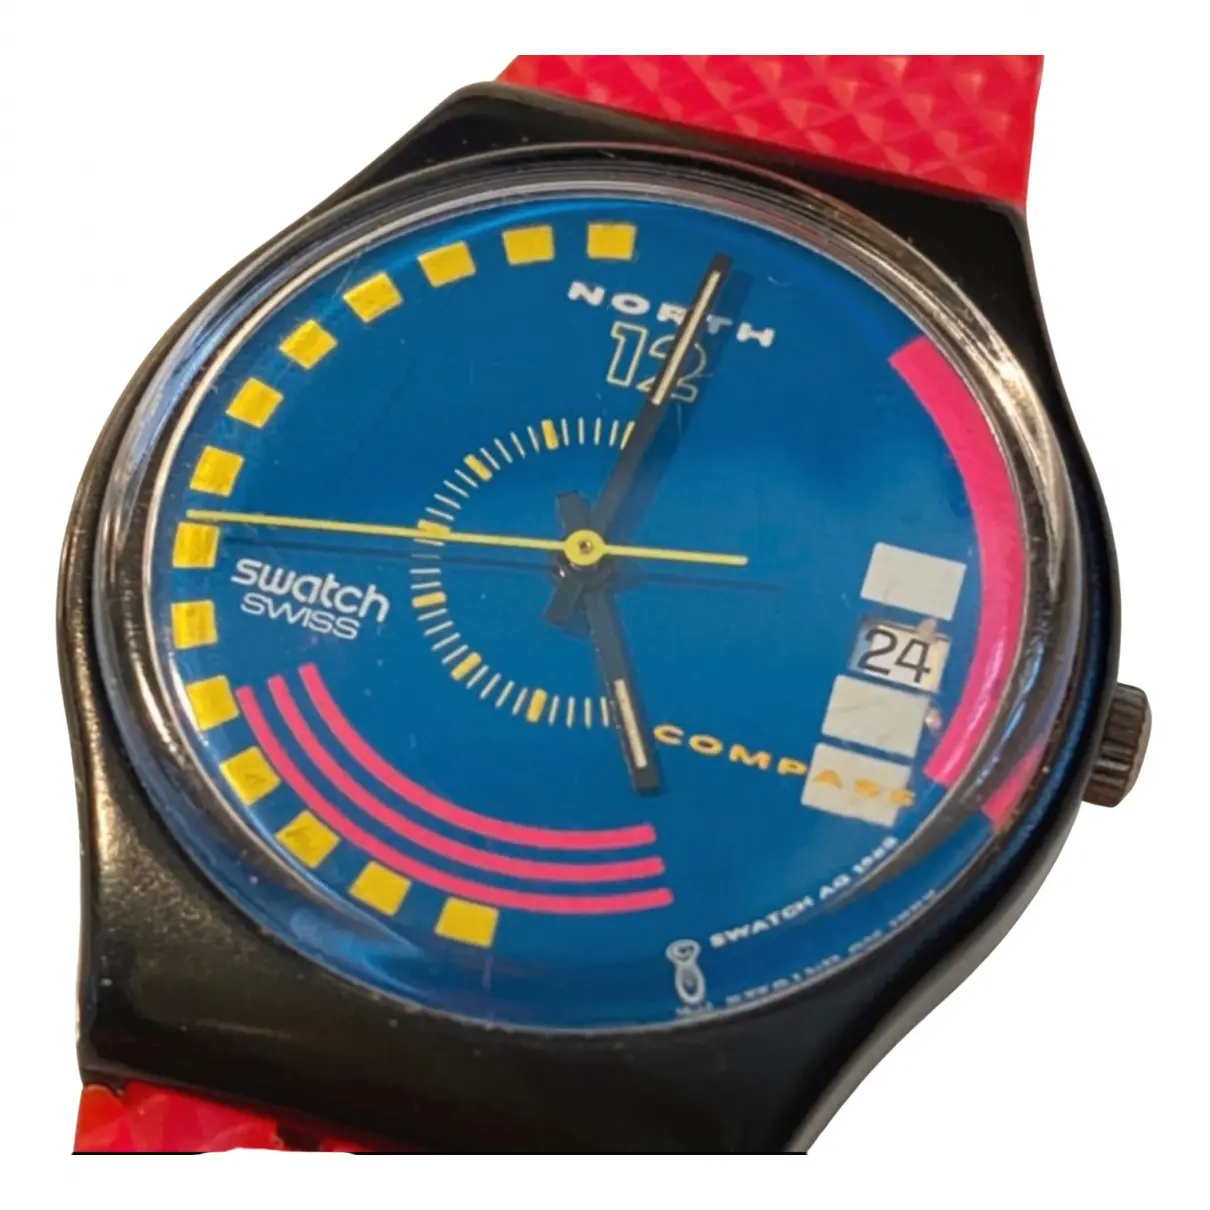 Buy Swatch Watch online